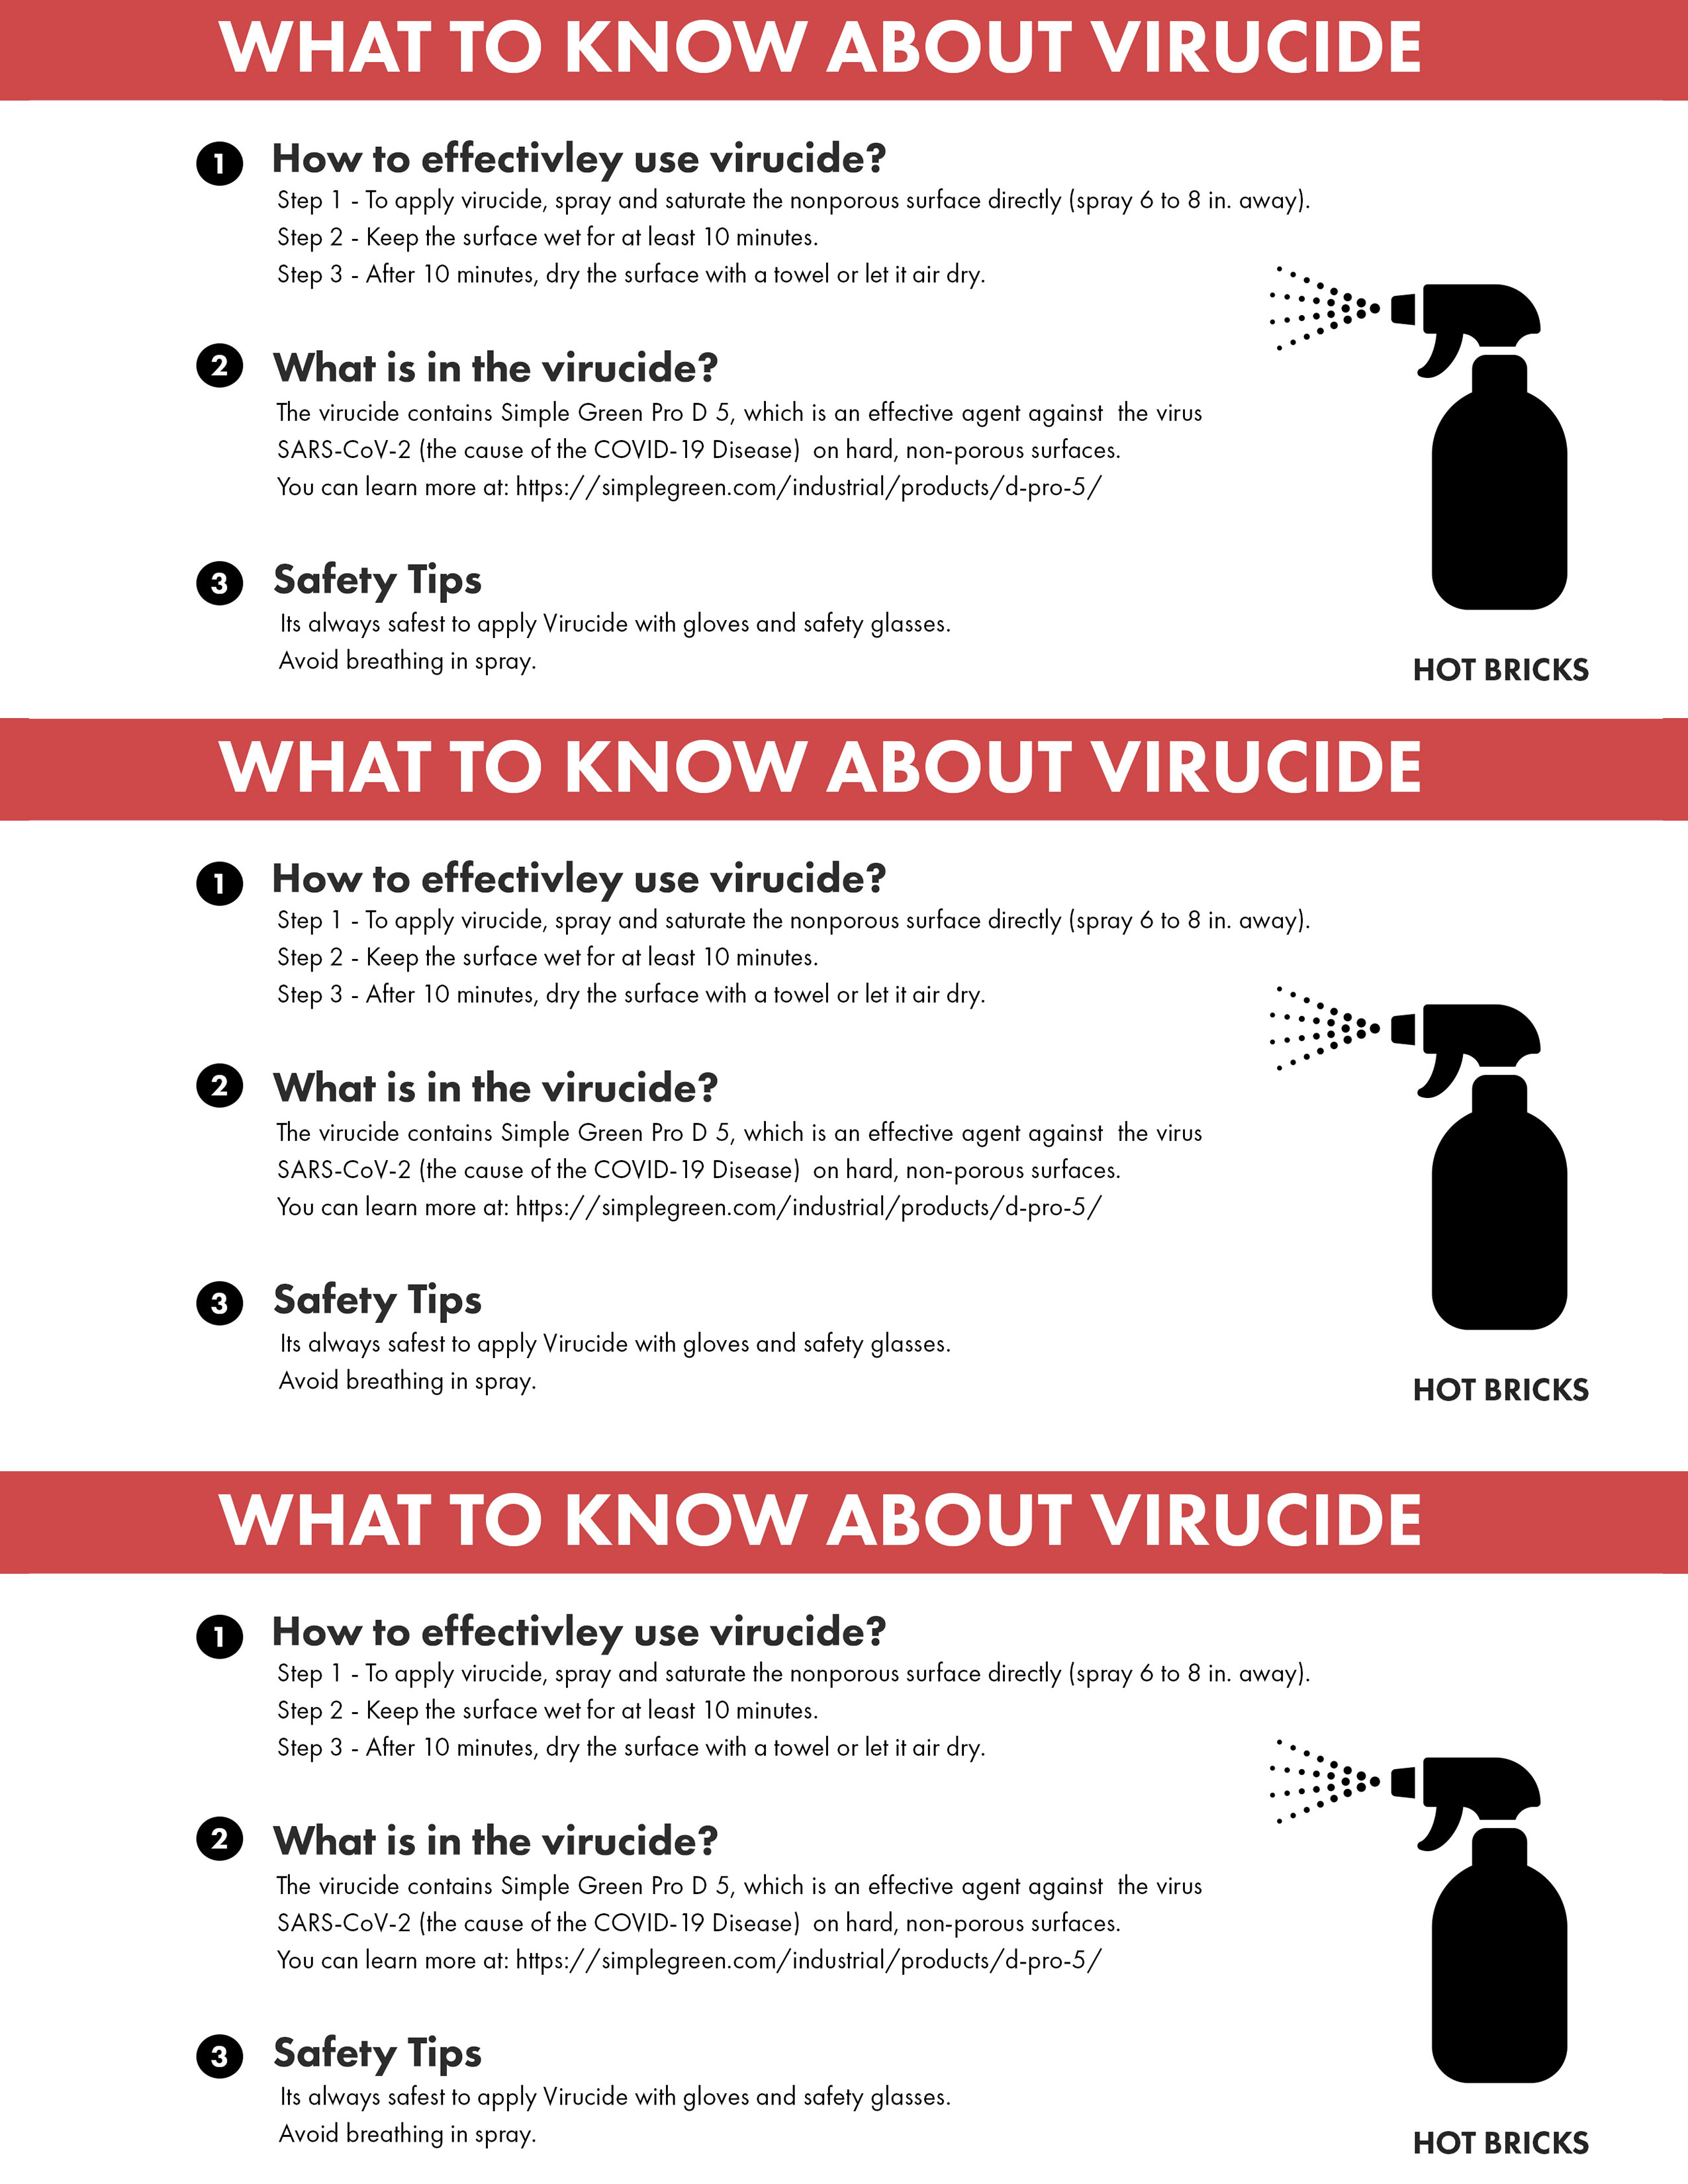 Hot Bricks Virucide Instructions